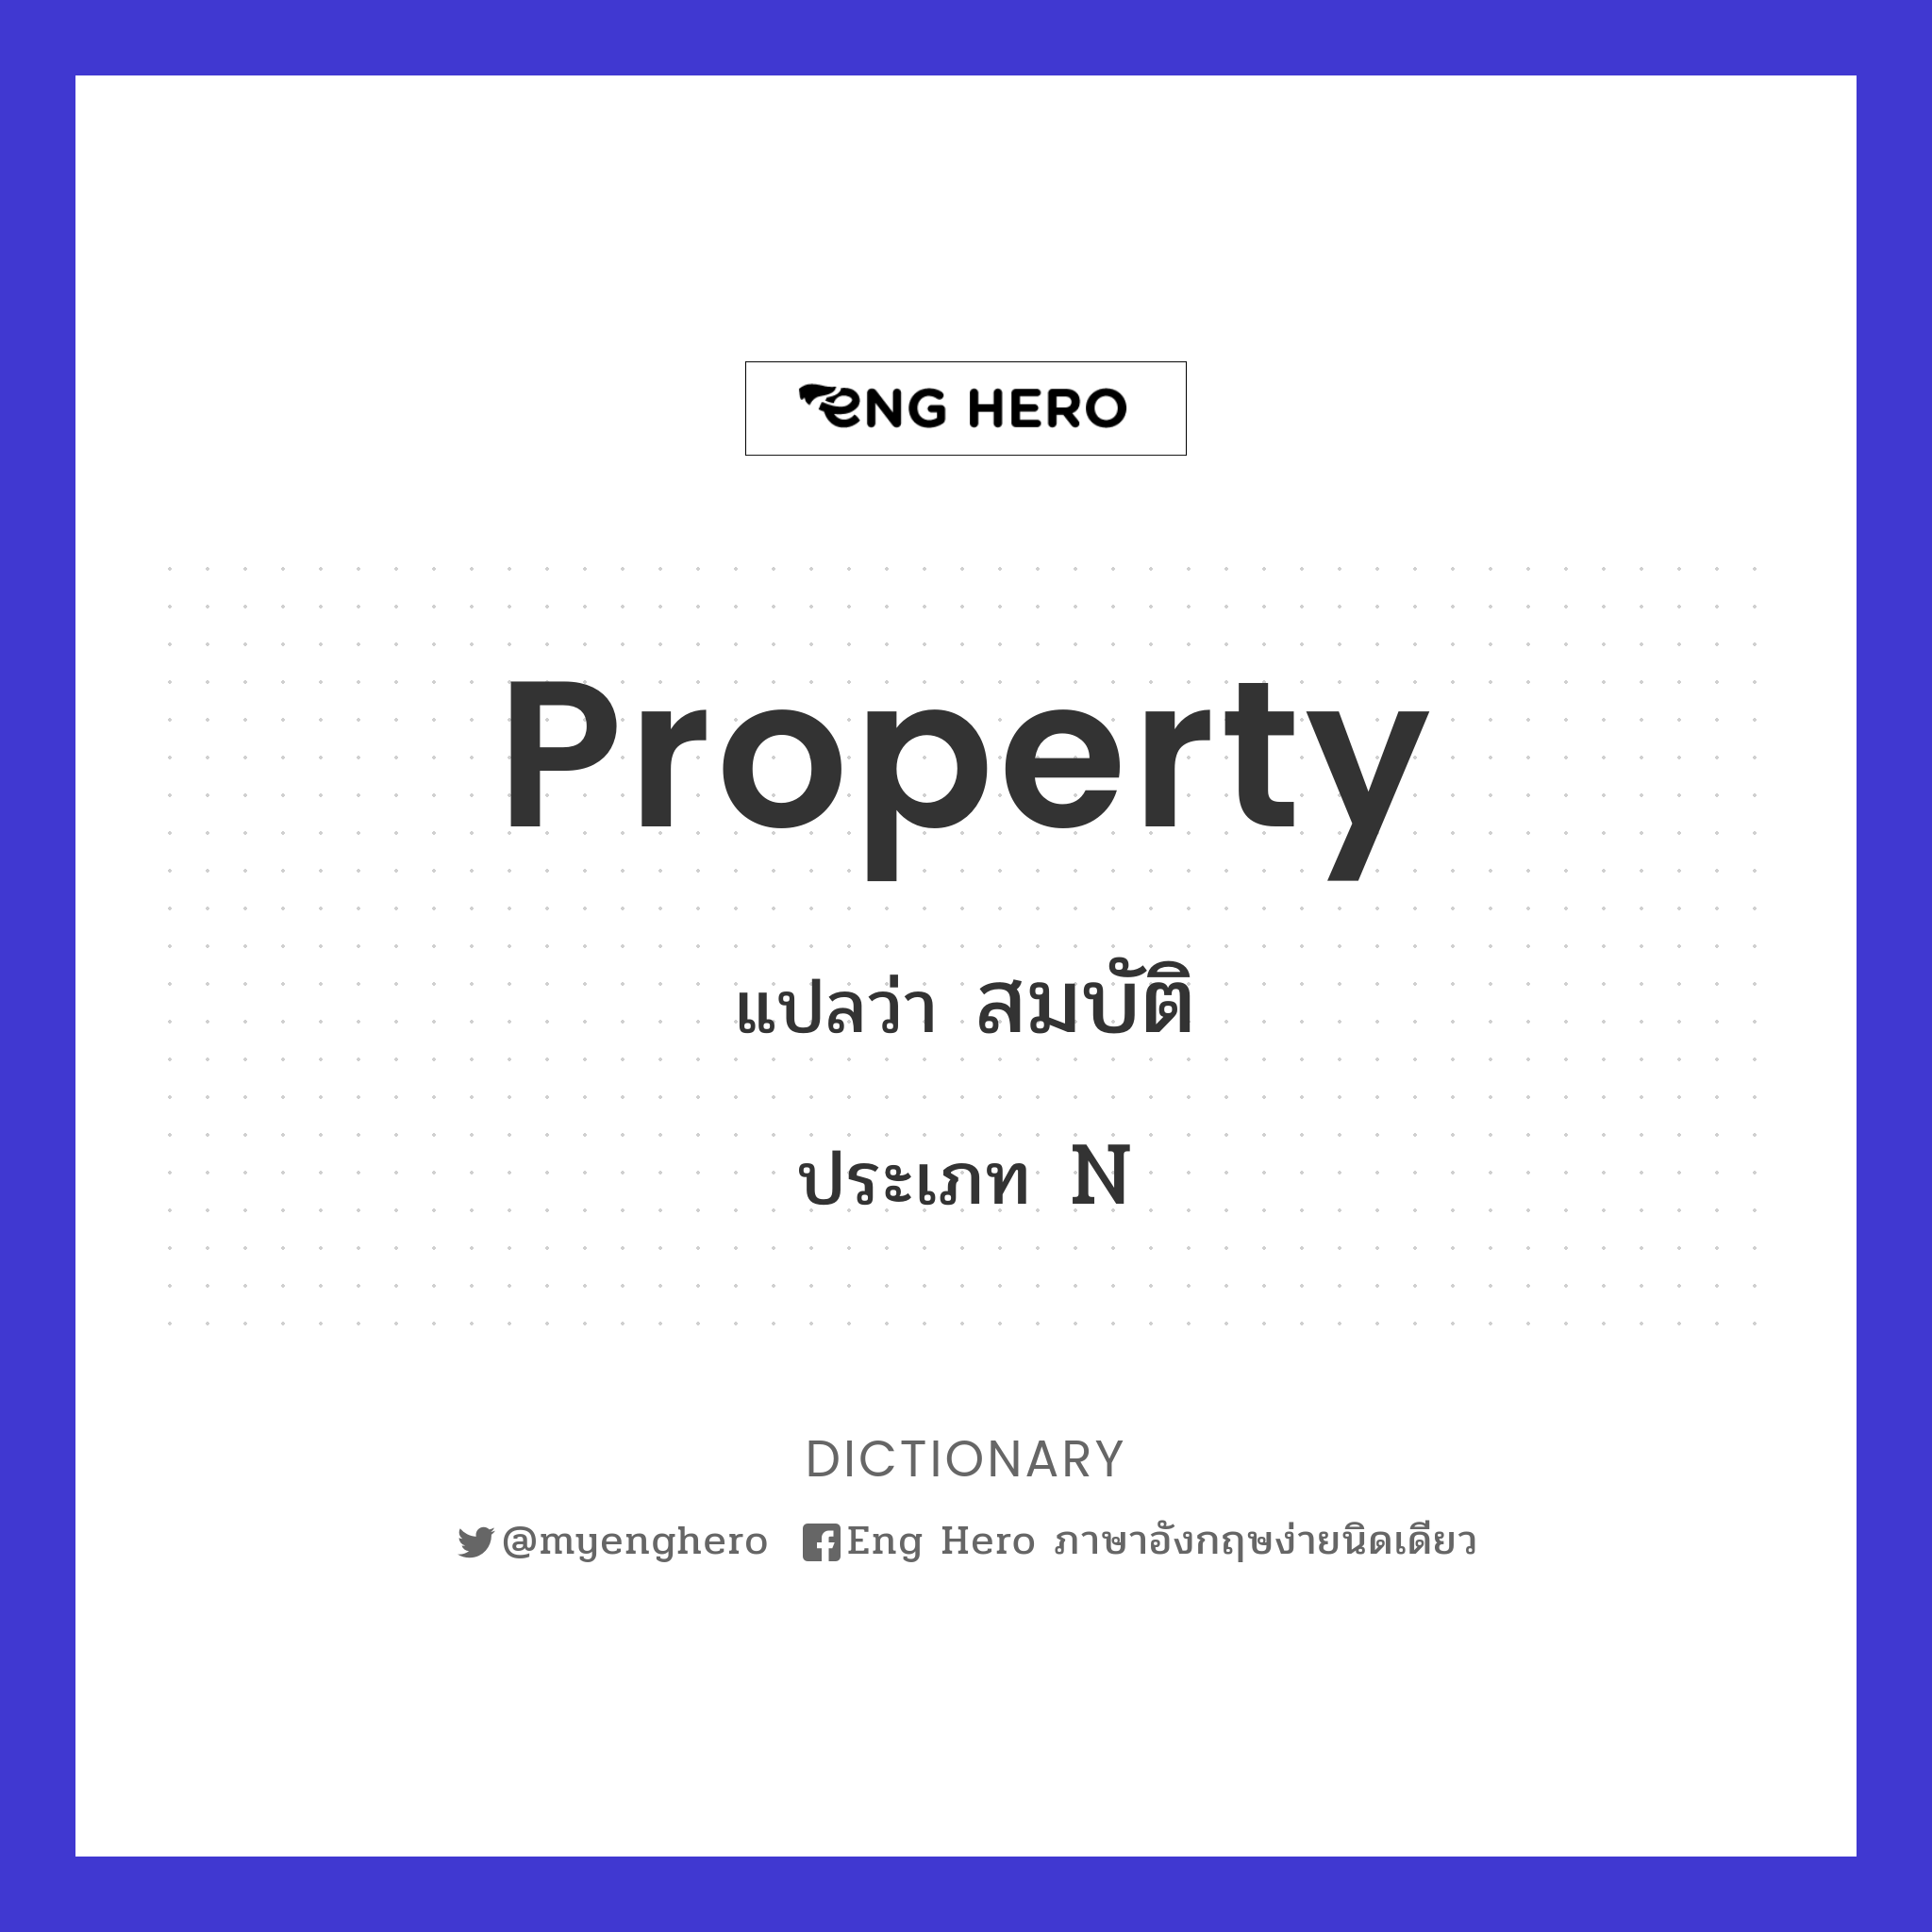 property